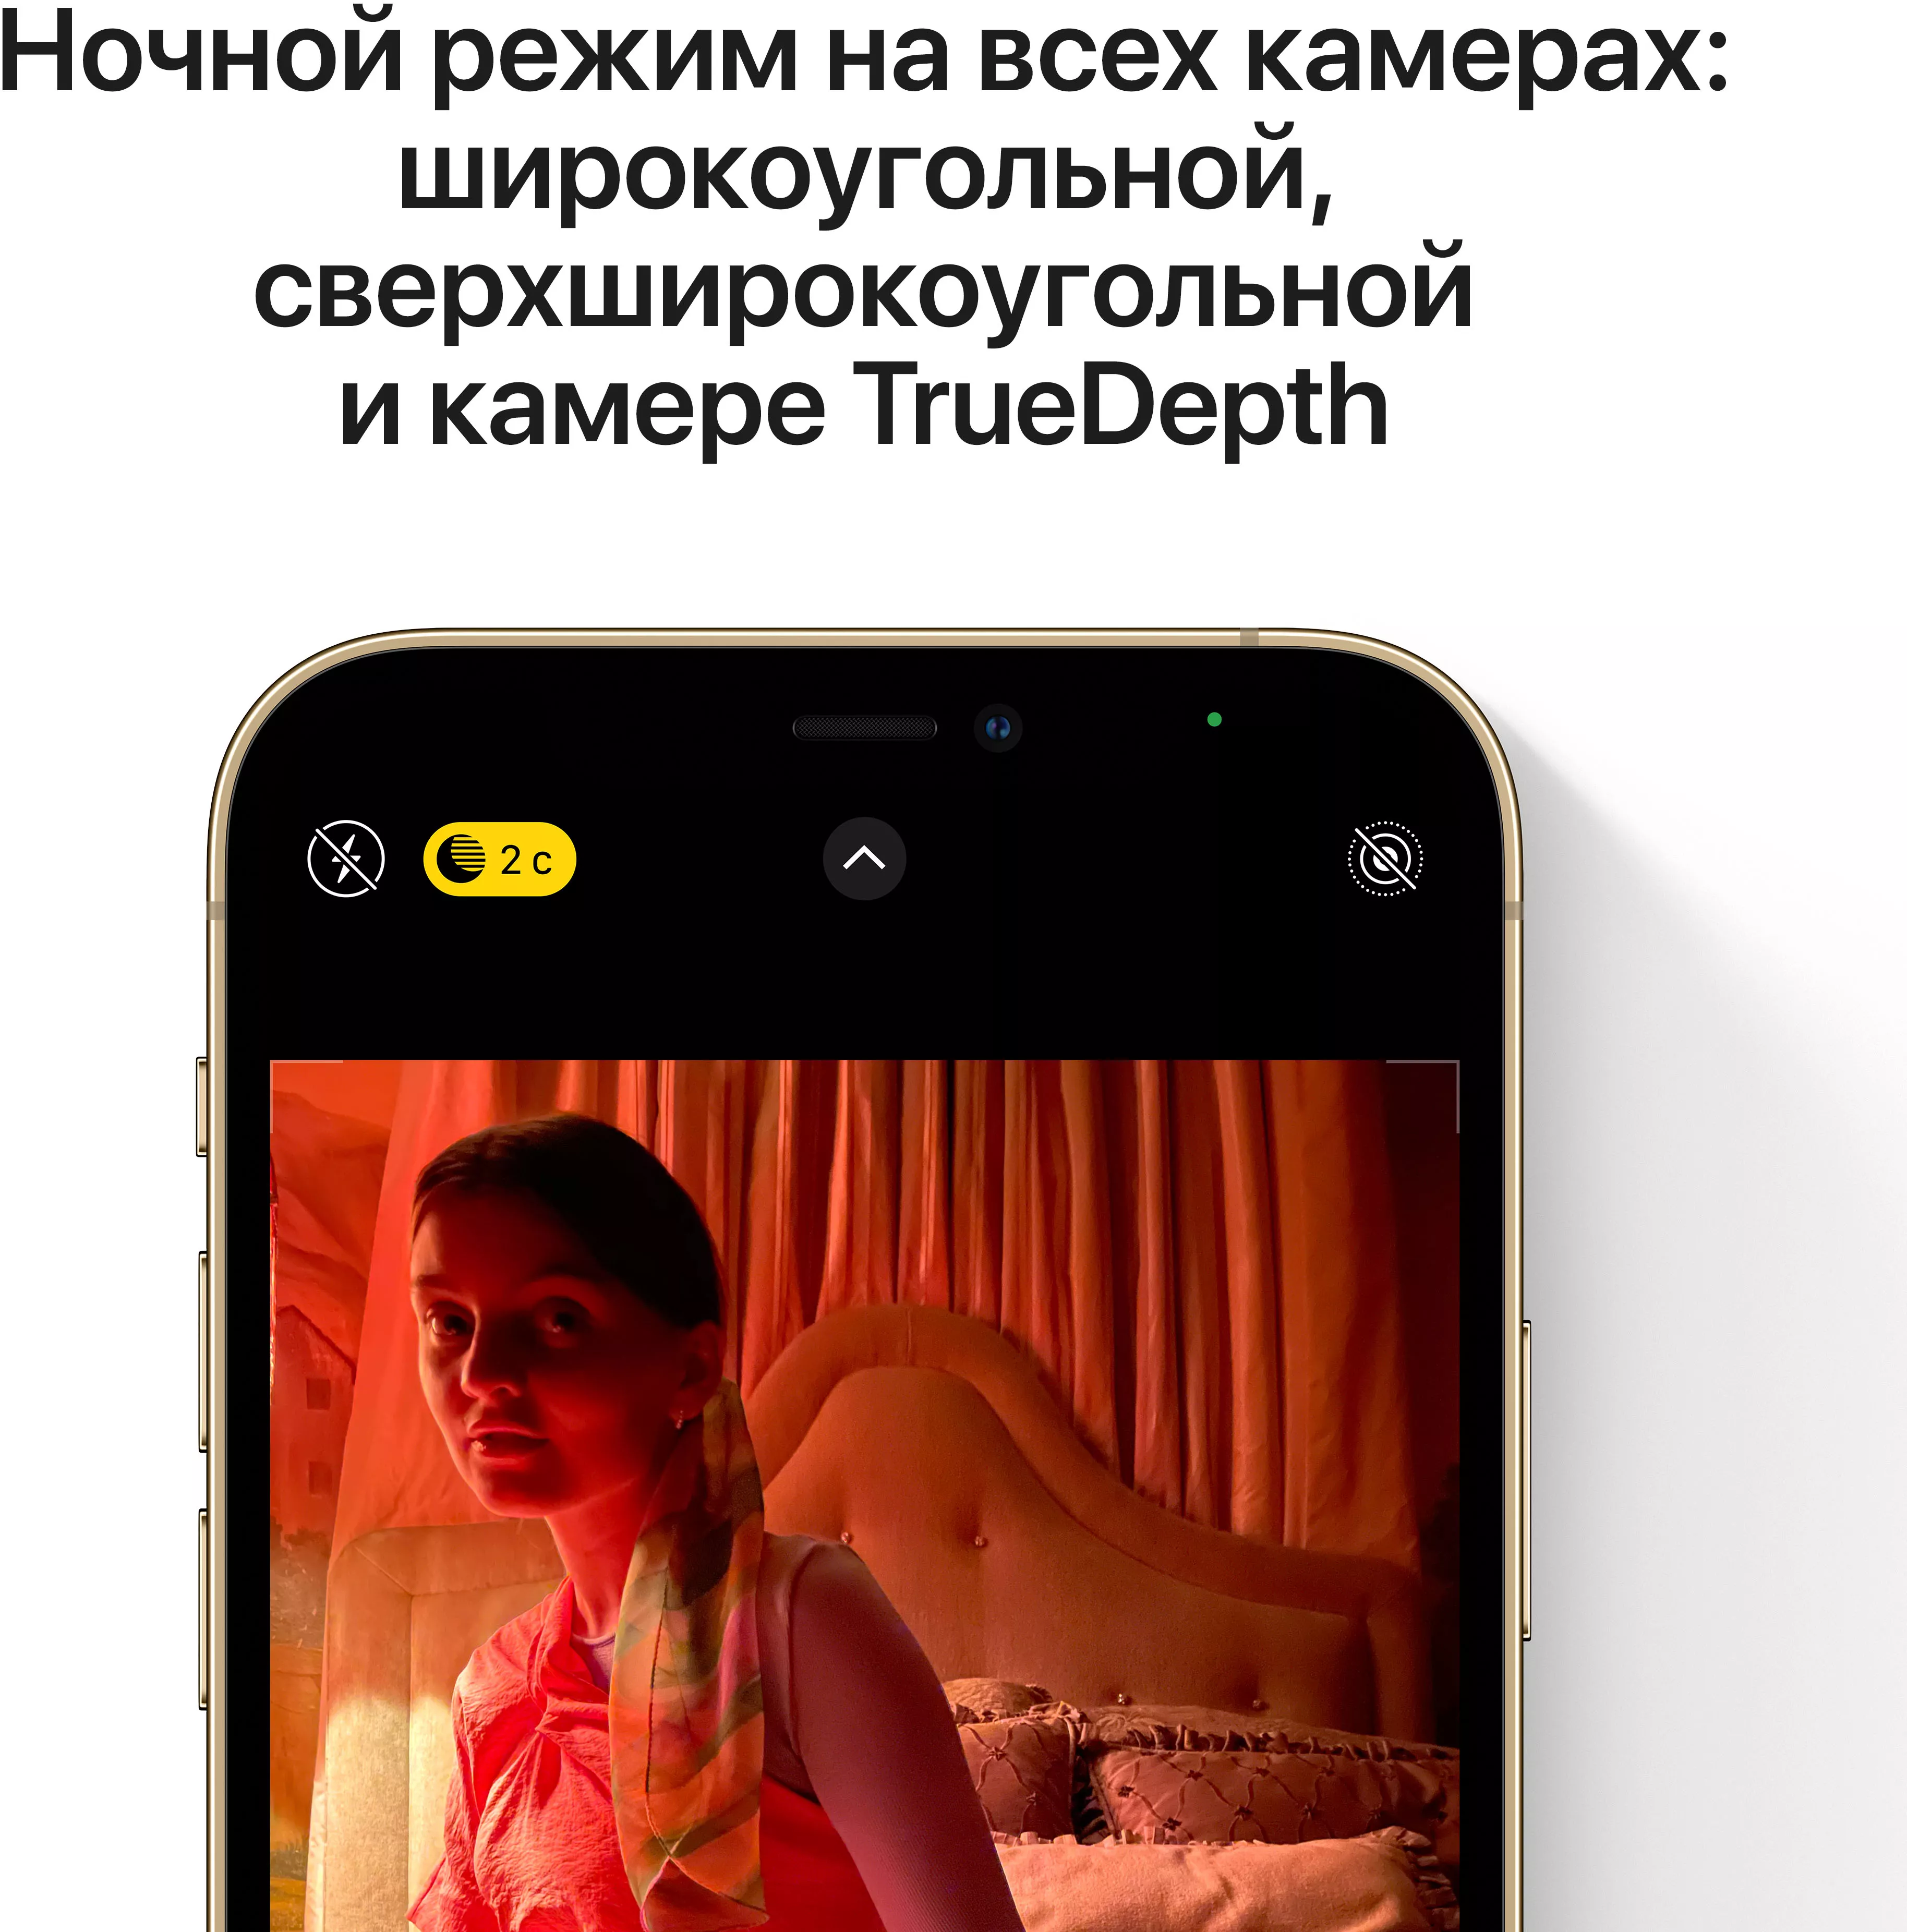 Apple iPhone 12 Pro Max 256ГБ Золотой